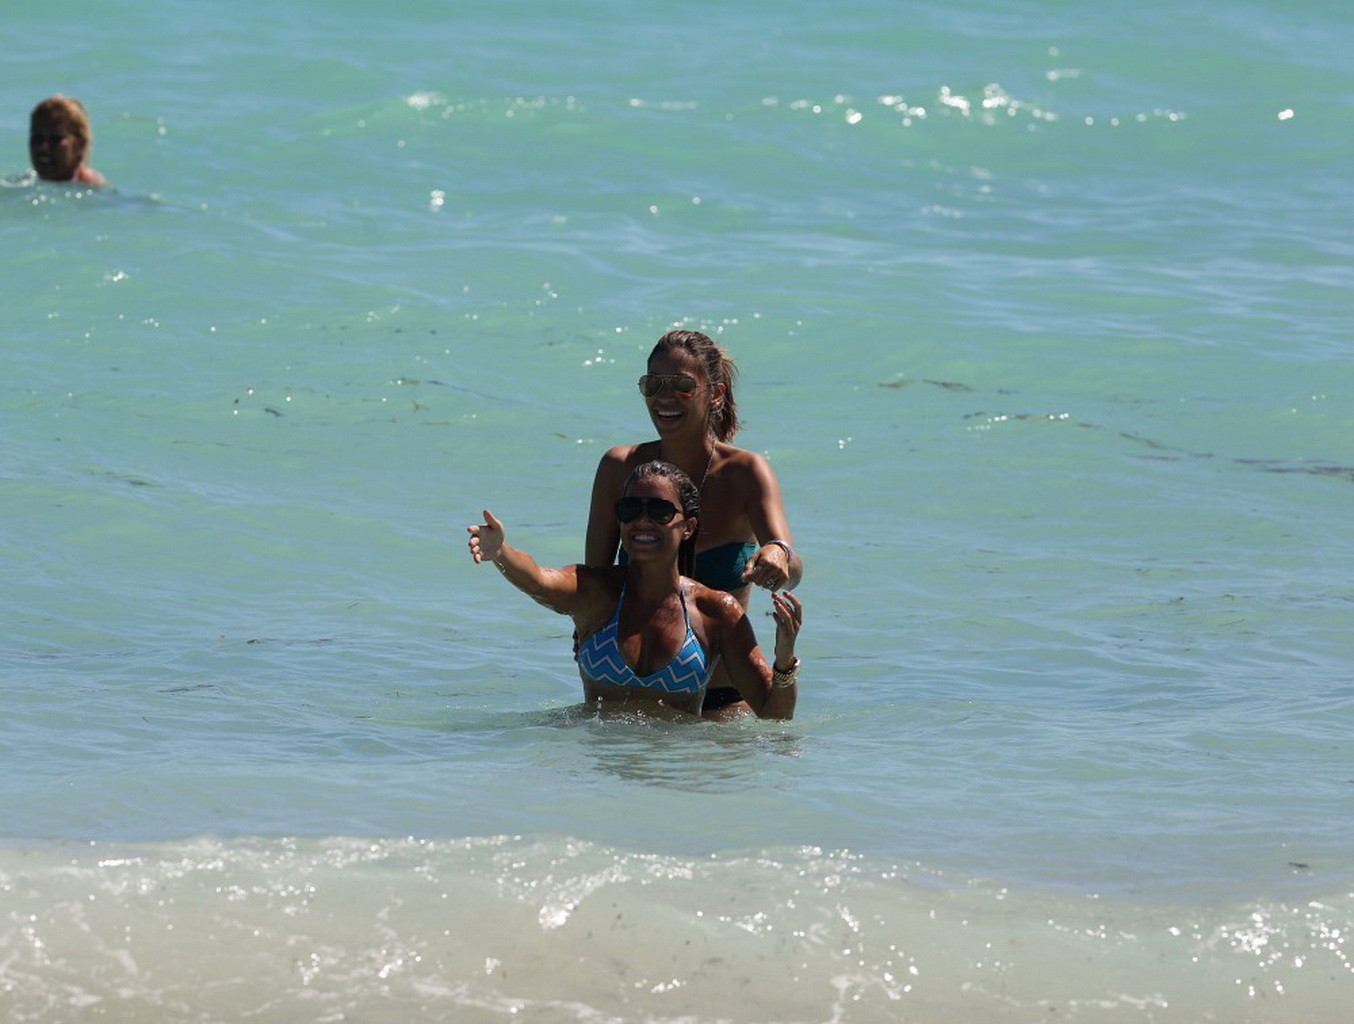 Sylvie van der Vaart wearing skimpy blue striped bikini on Miami Beach #75216302